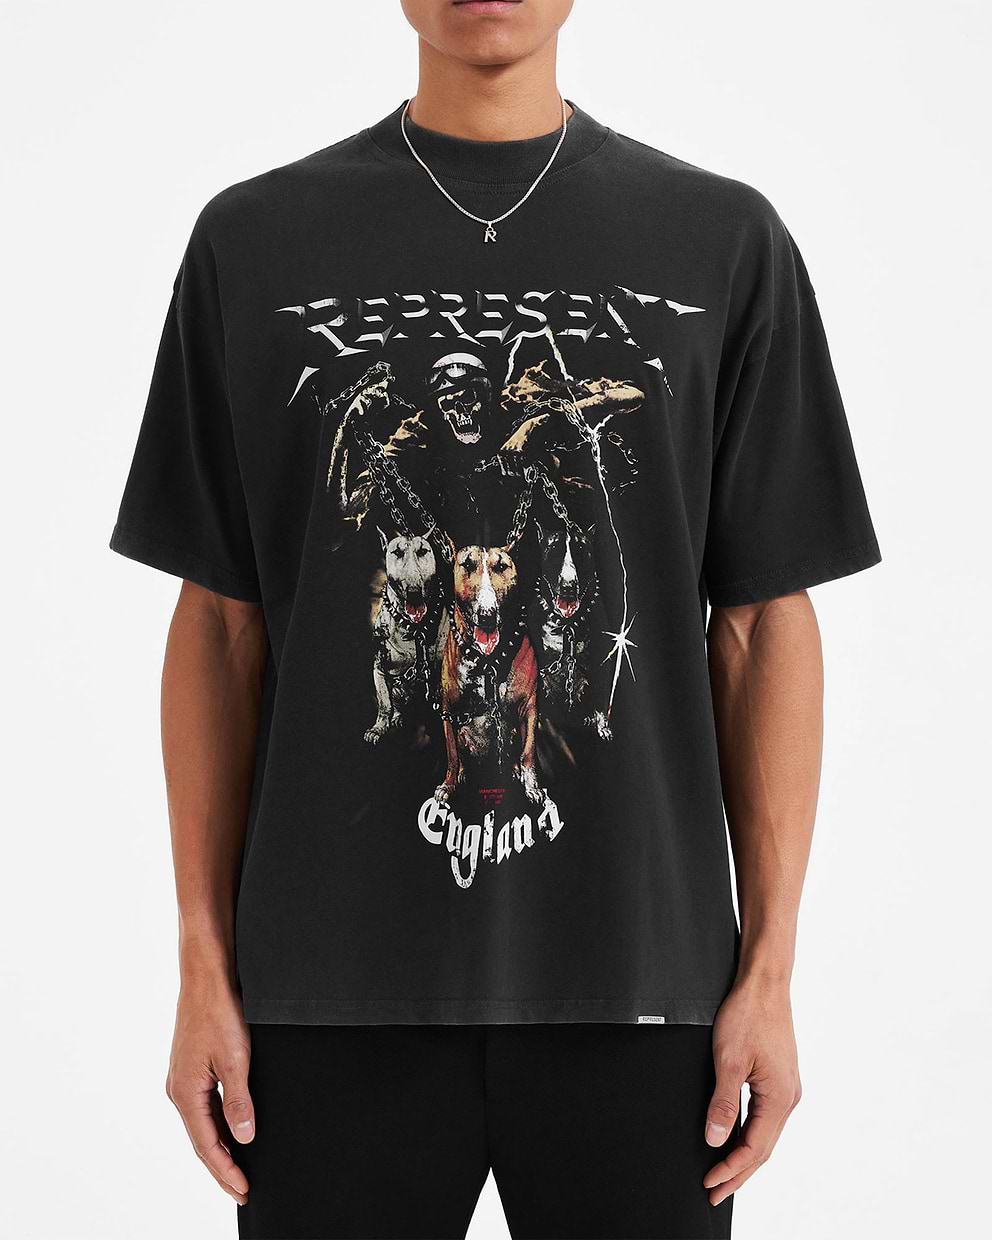 Terrier Tension T-shirt - Vintage Black